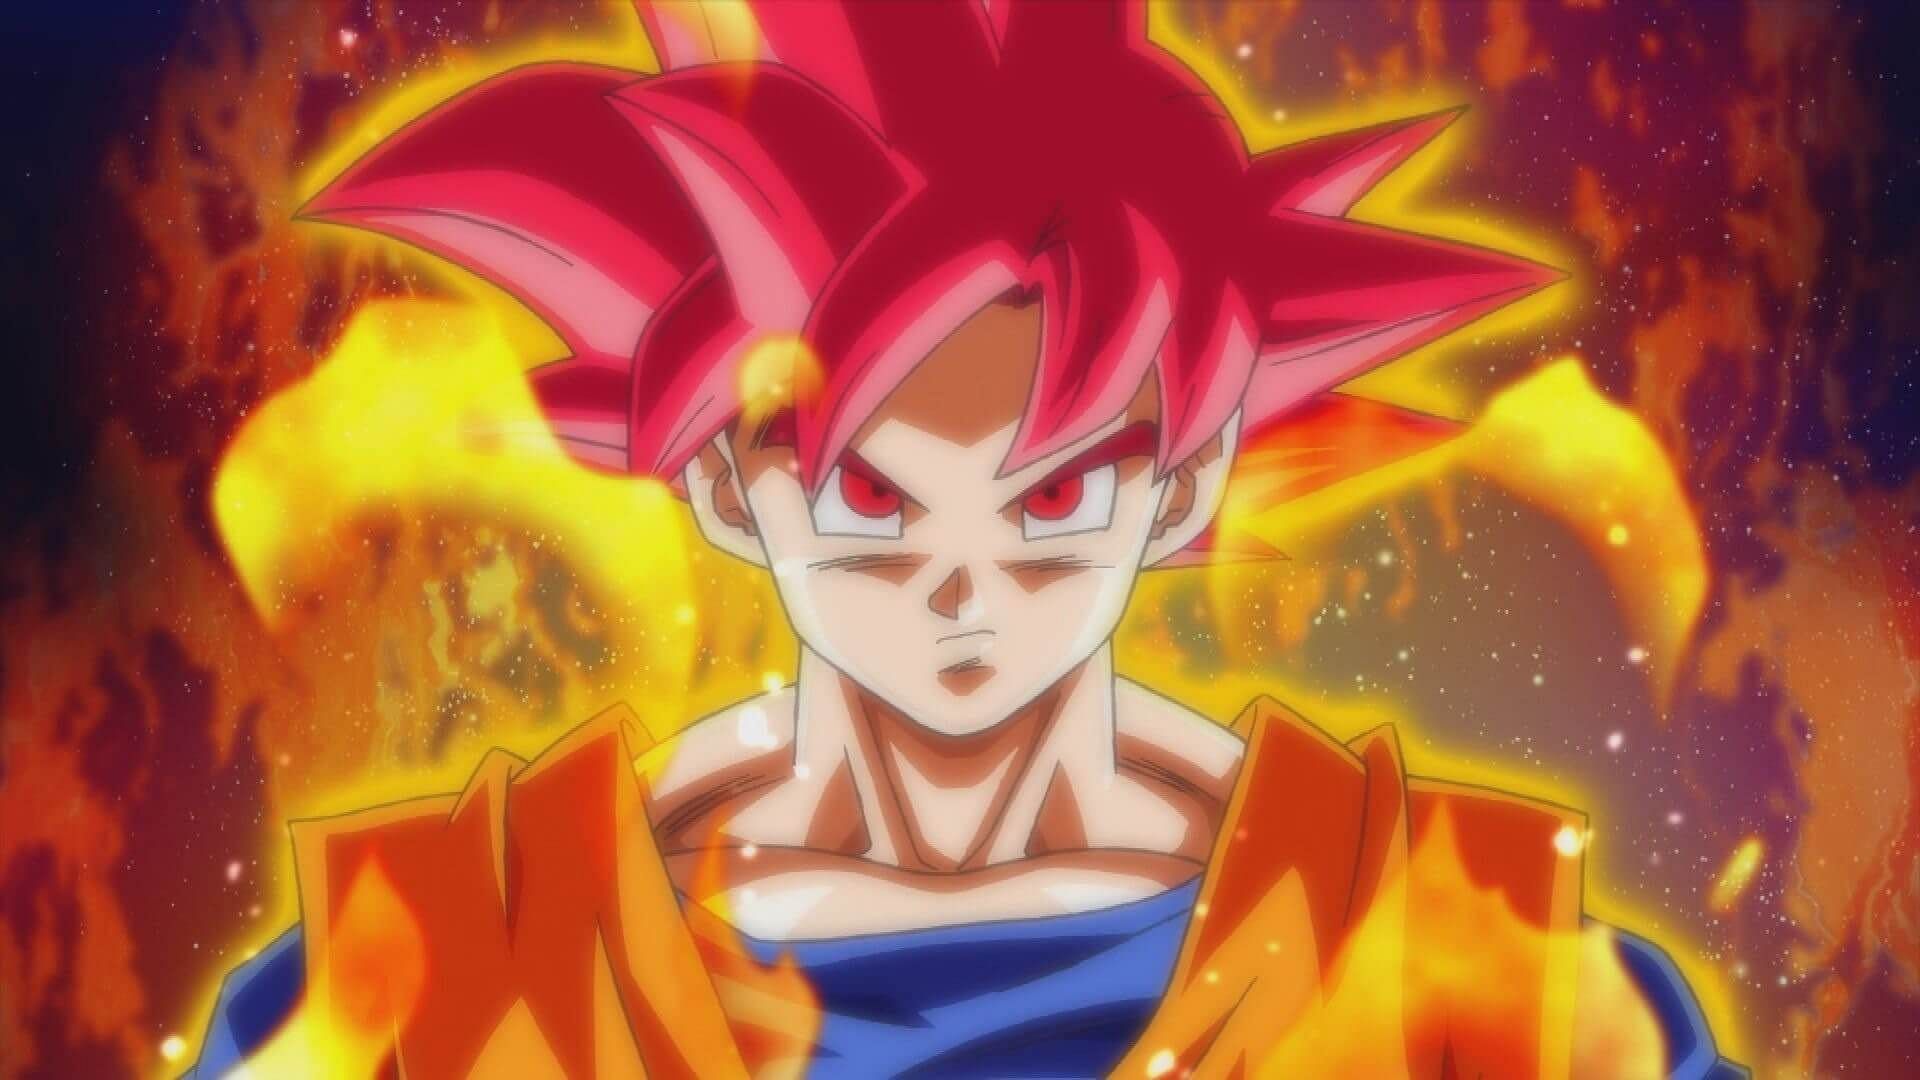 Goku Super Saiyan God (Image via Toei animation)